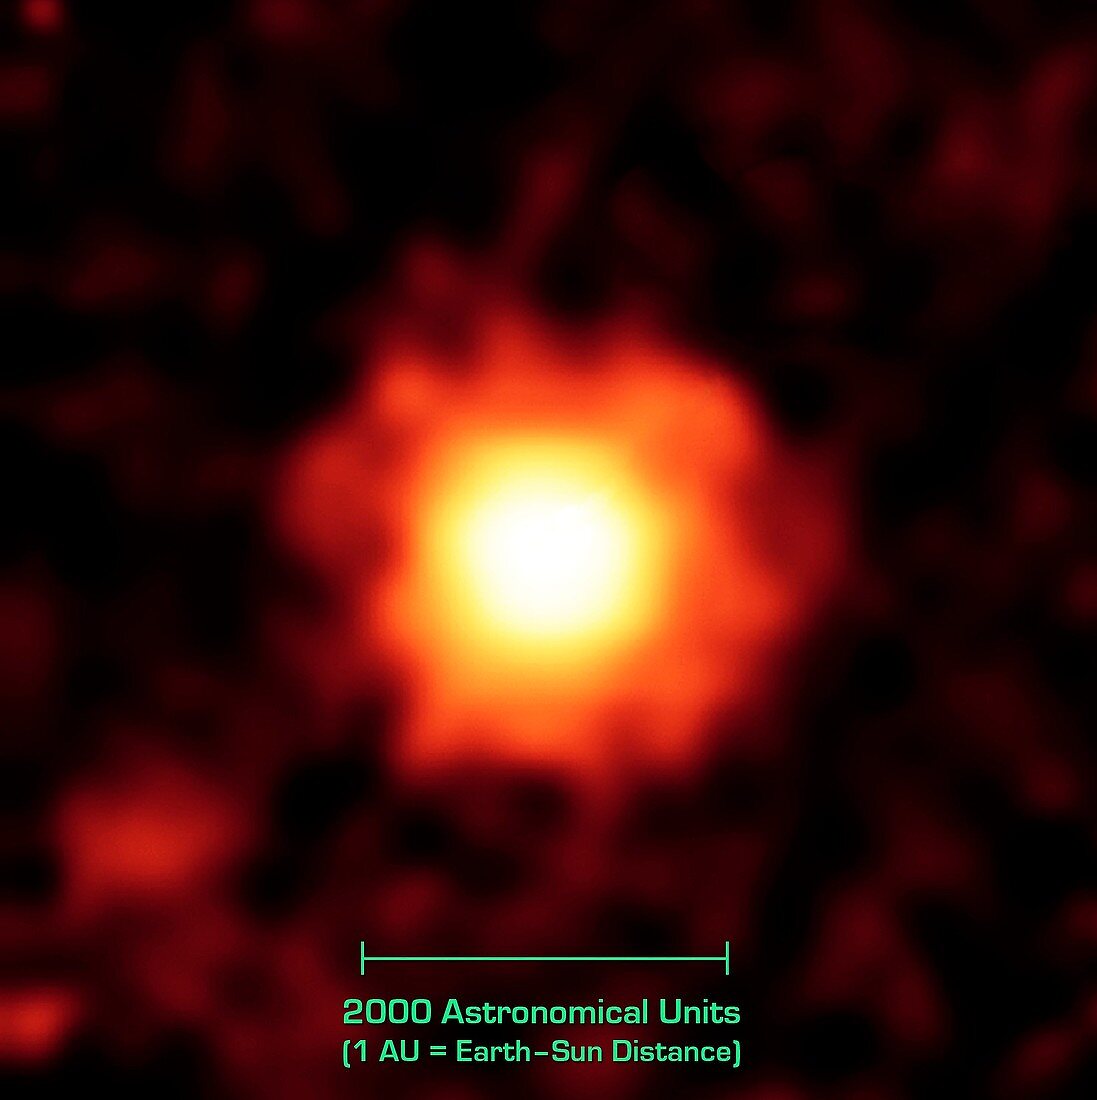 Dust halo around young star HR 8799